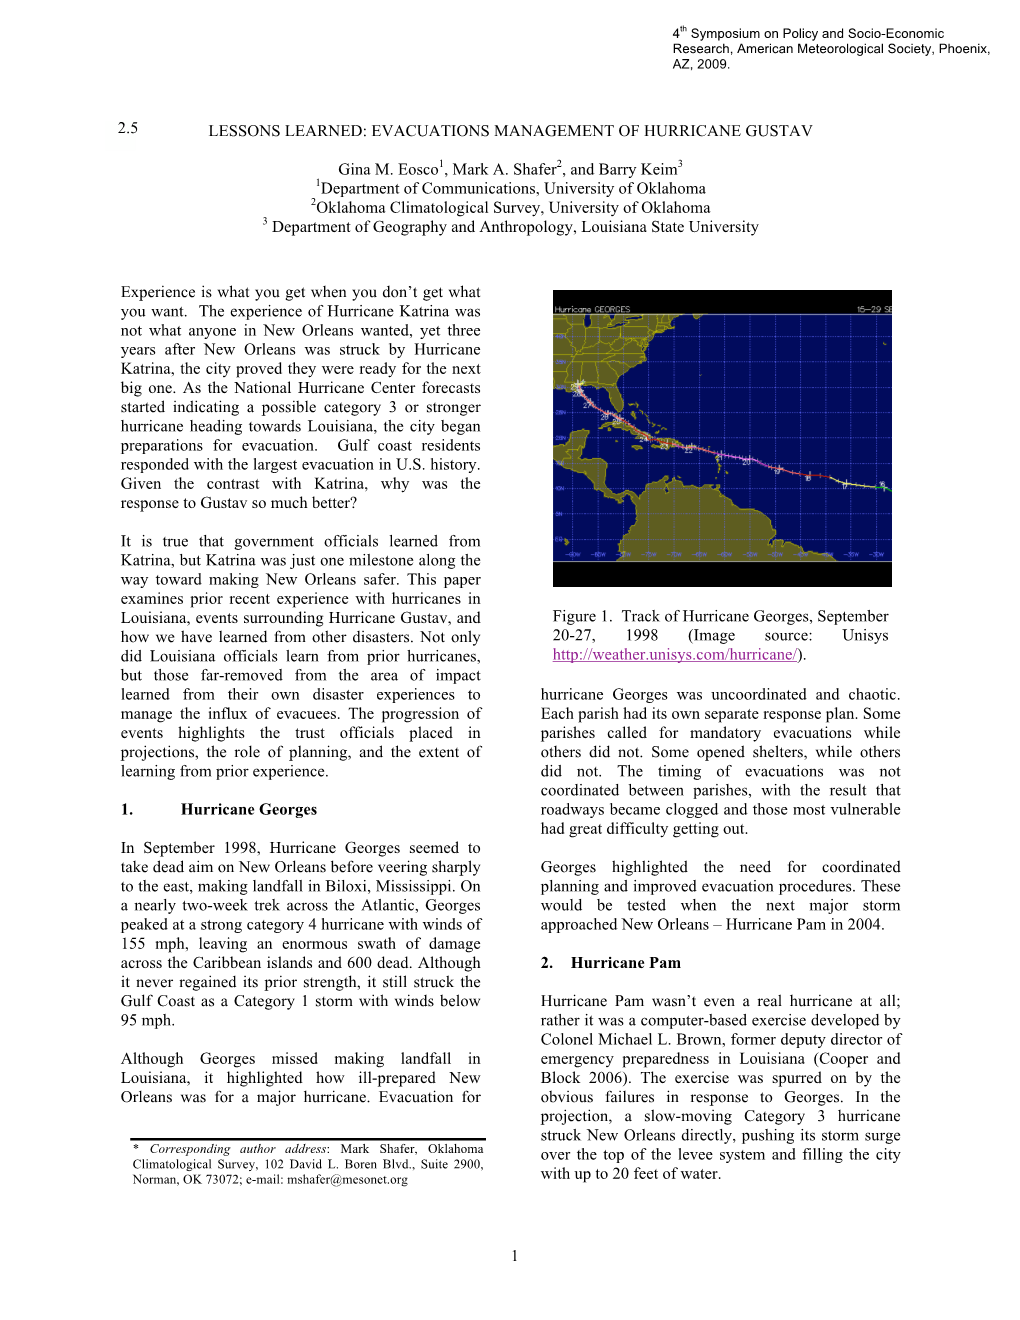 Lessons Learned: Evacuations Management of Hurricane Gustav